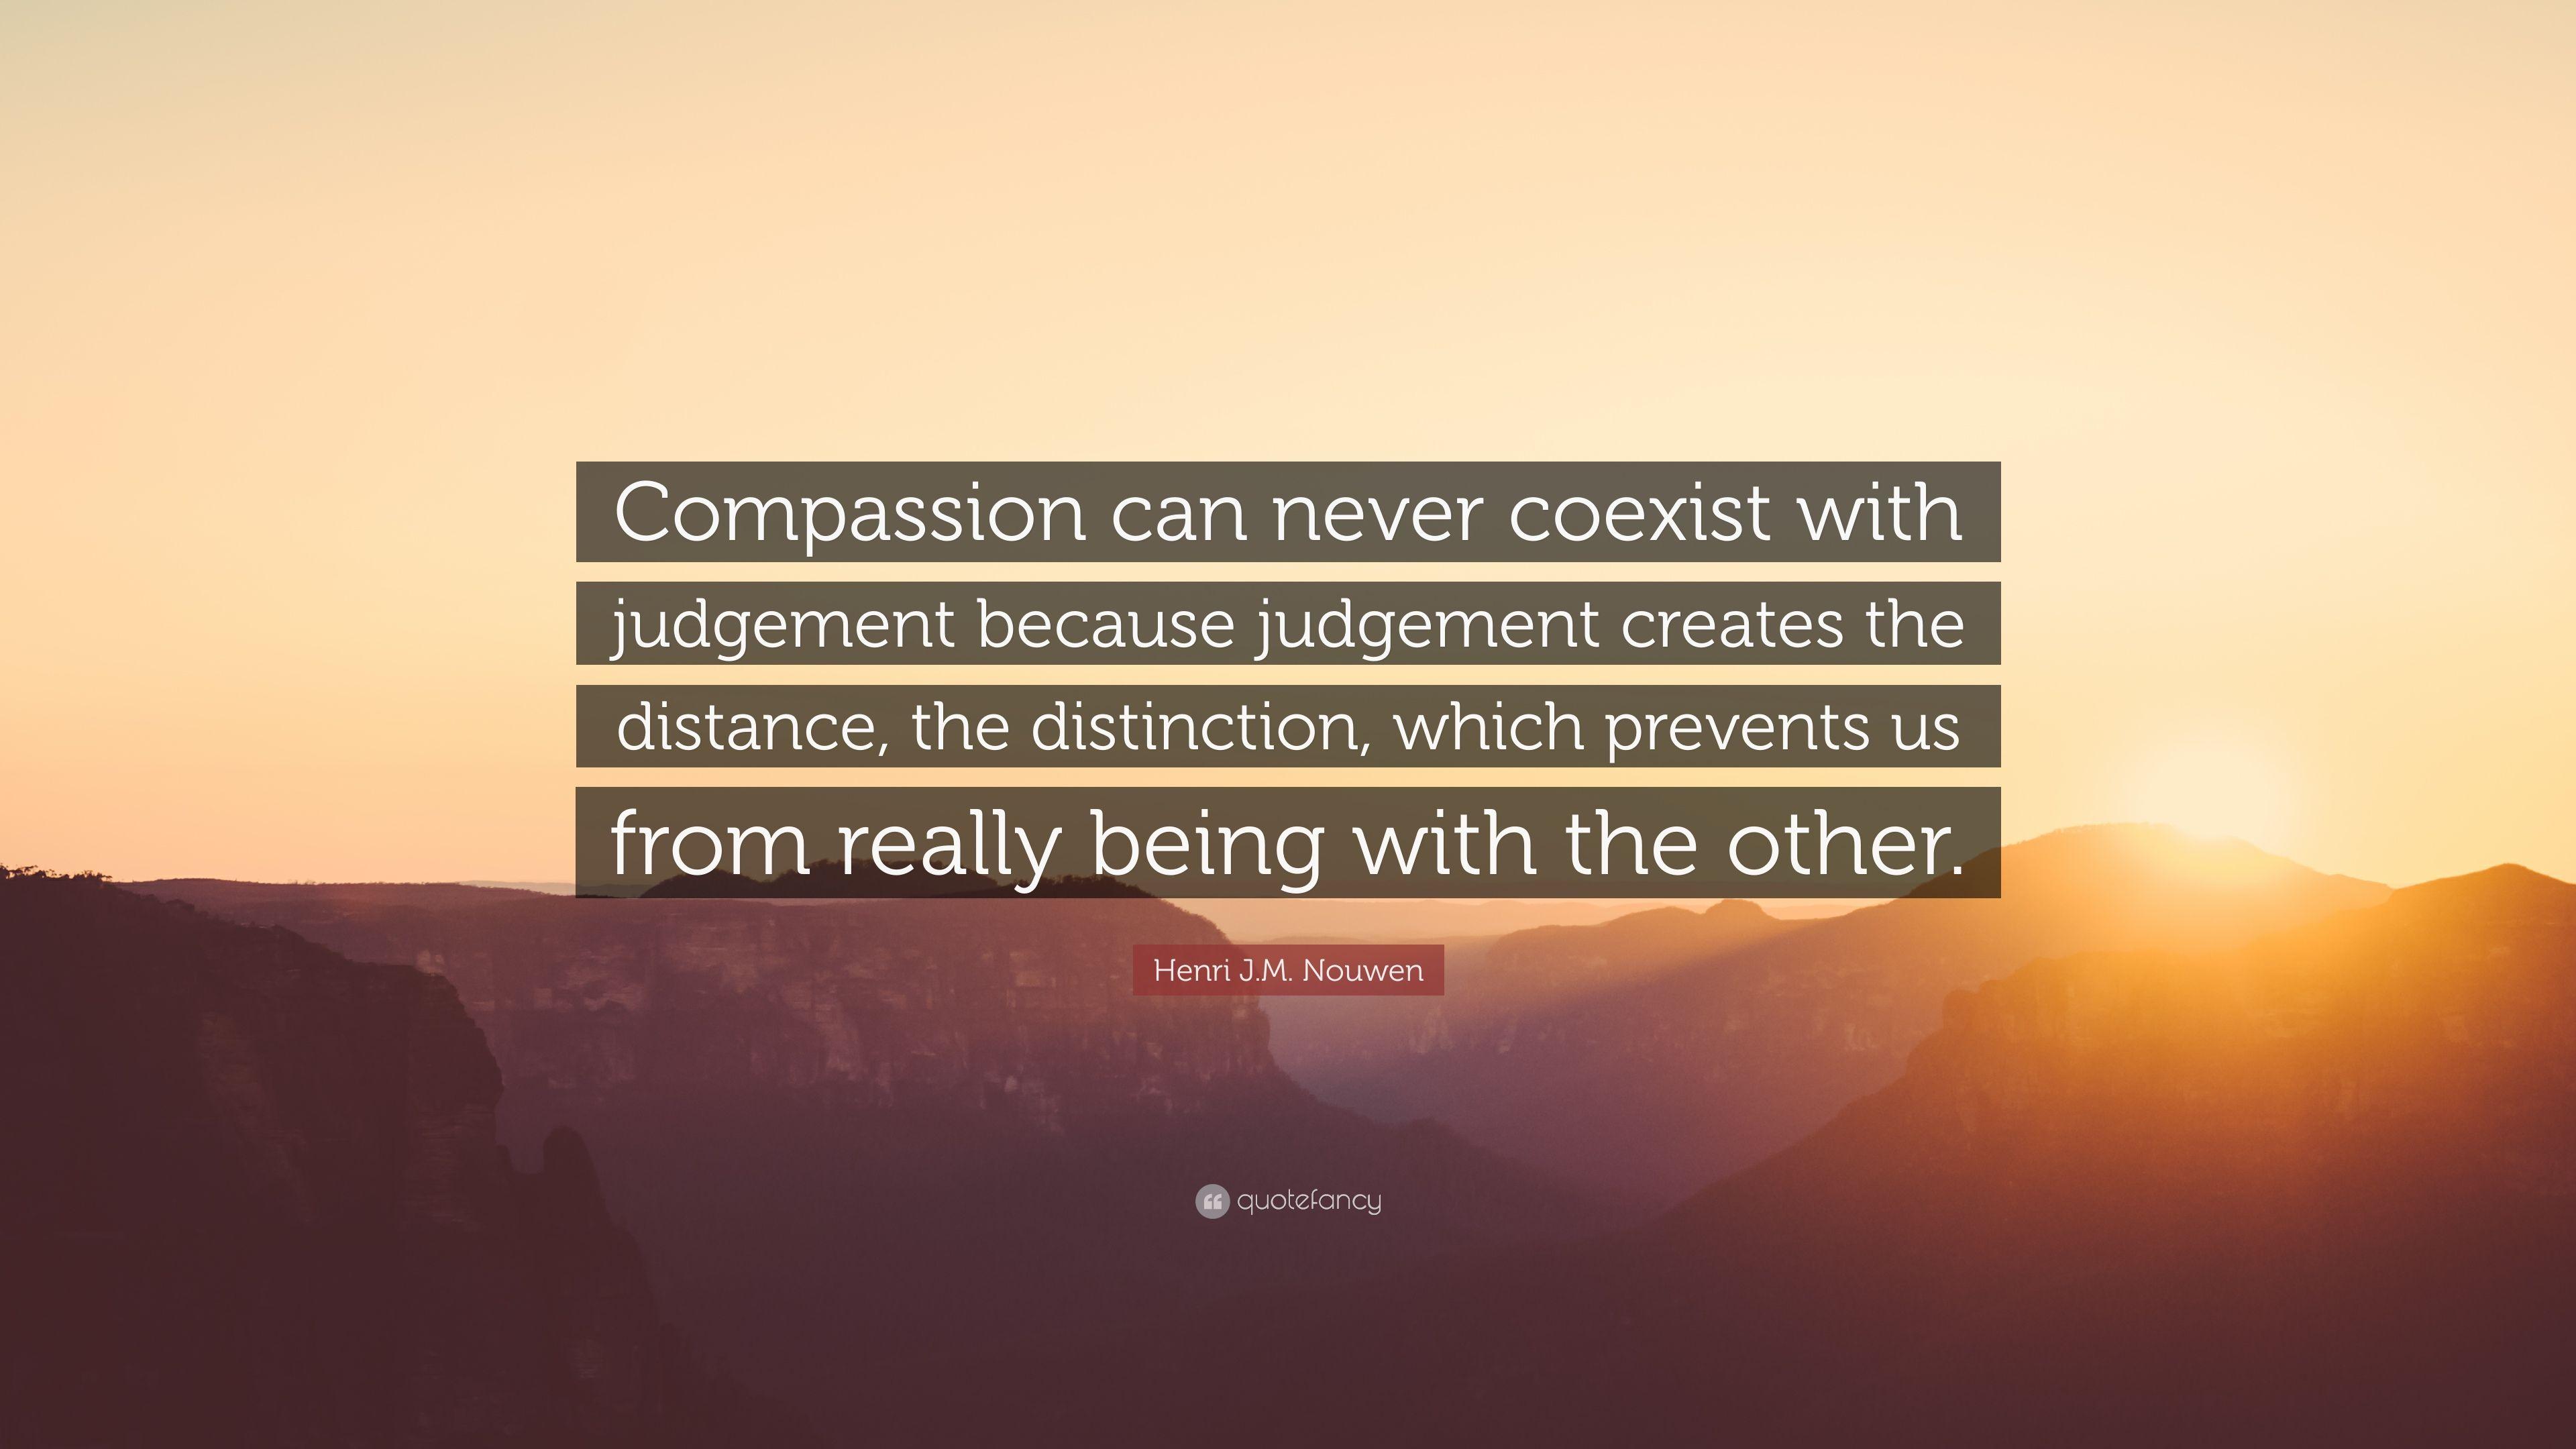 Henri J.M. Nouwen Quote: “Compassion can never coexist